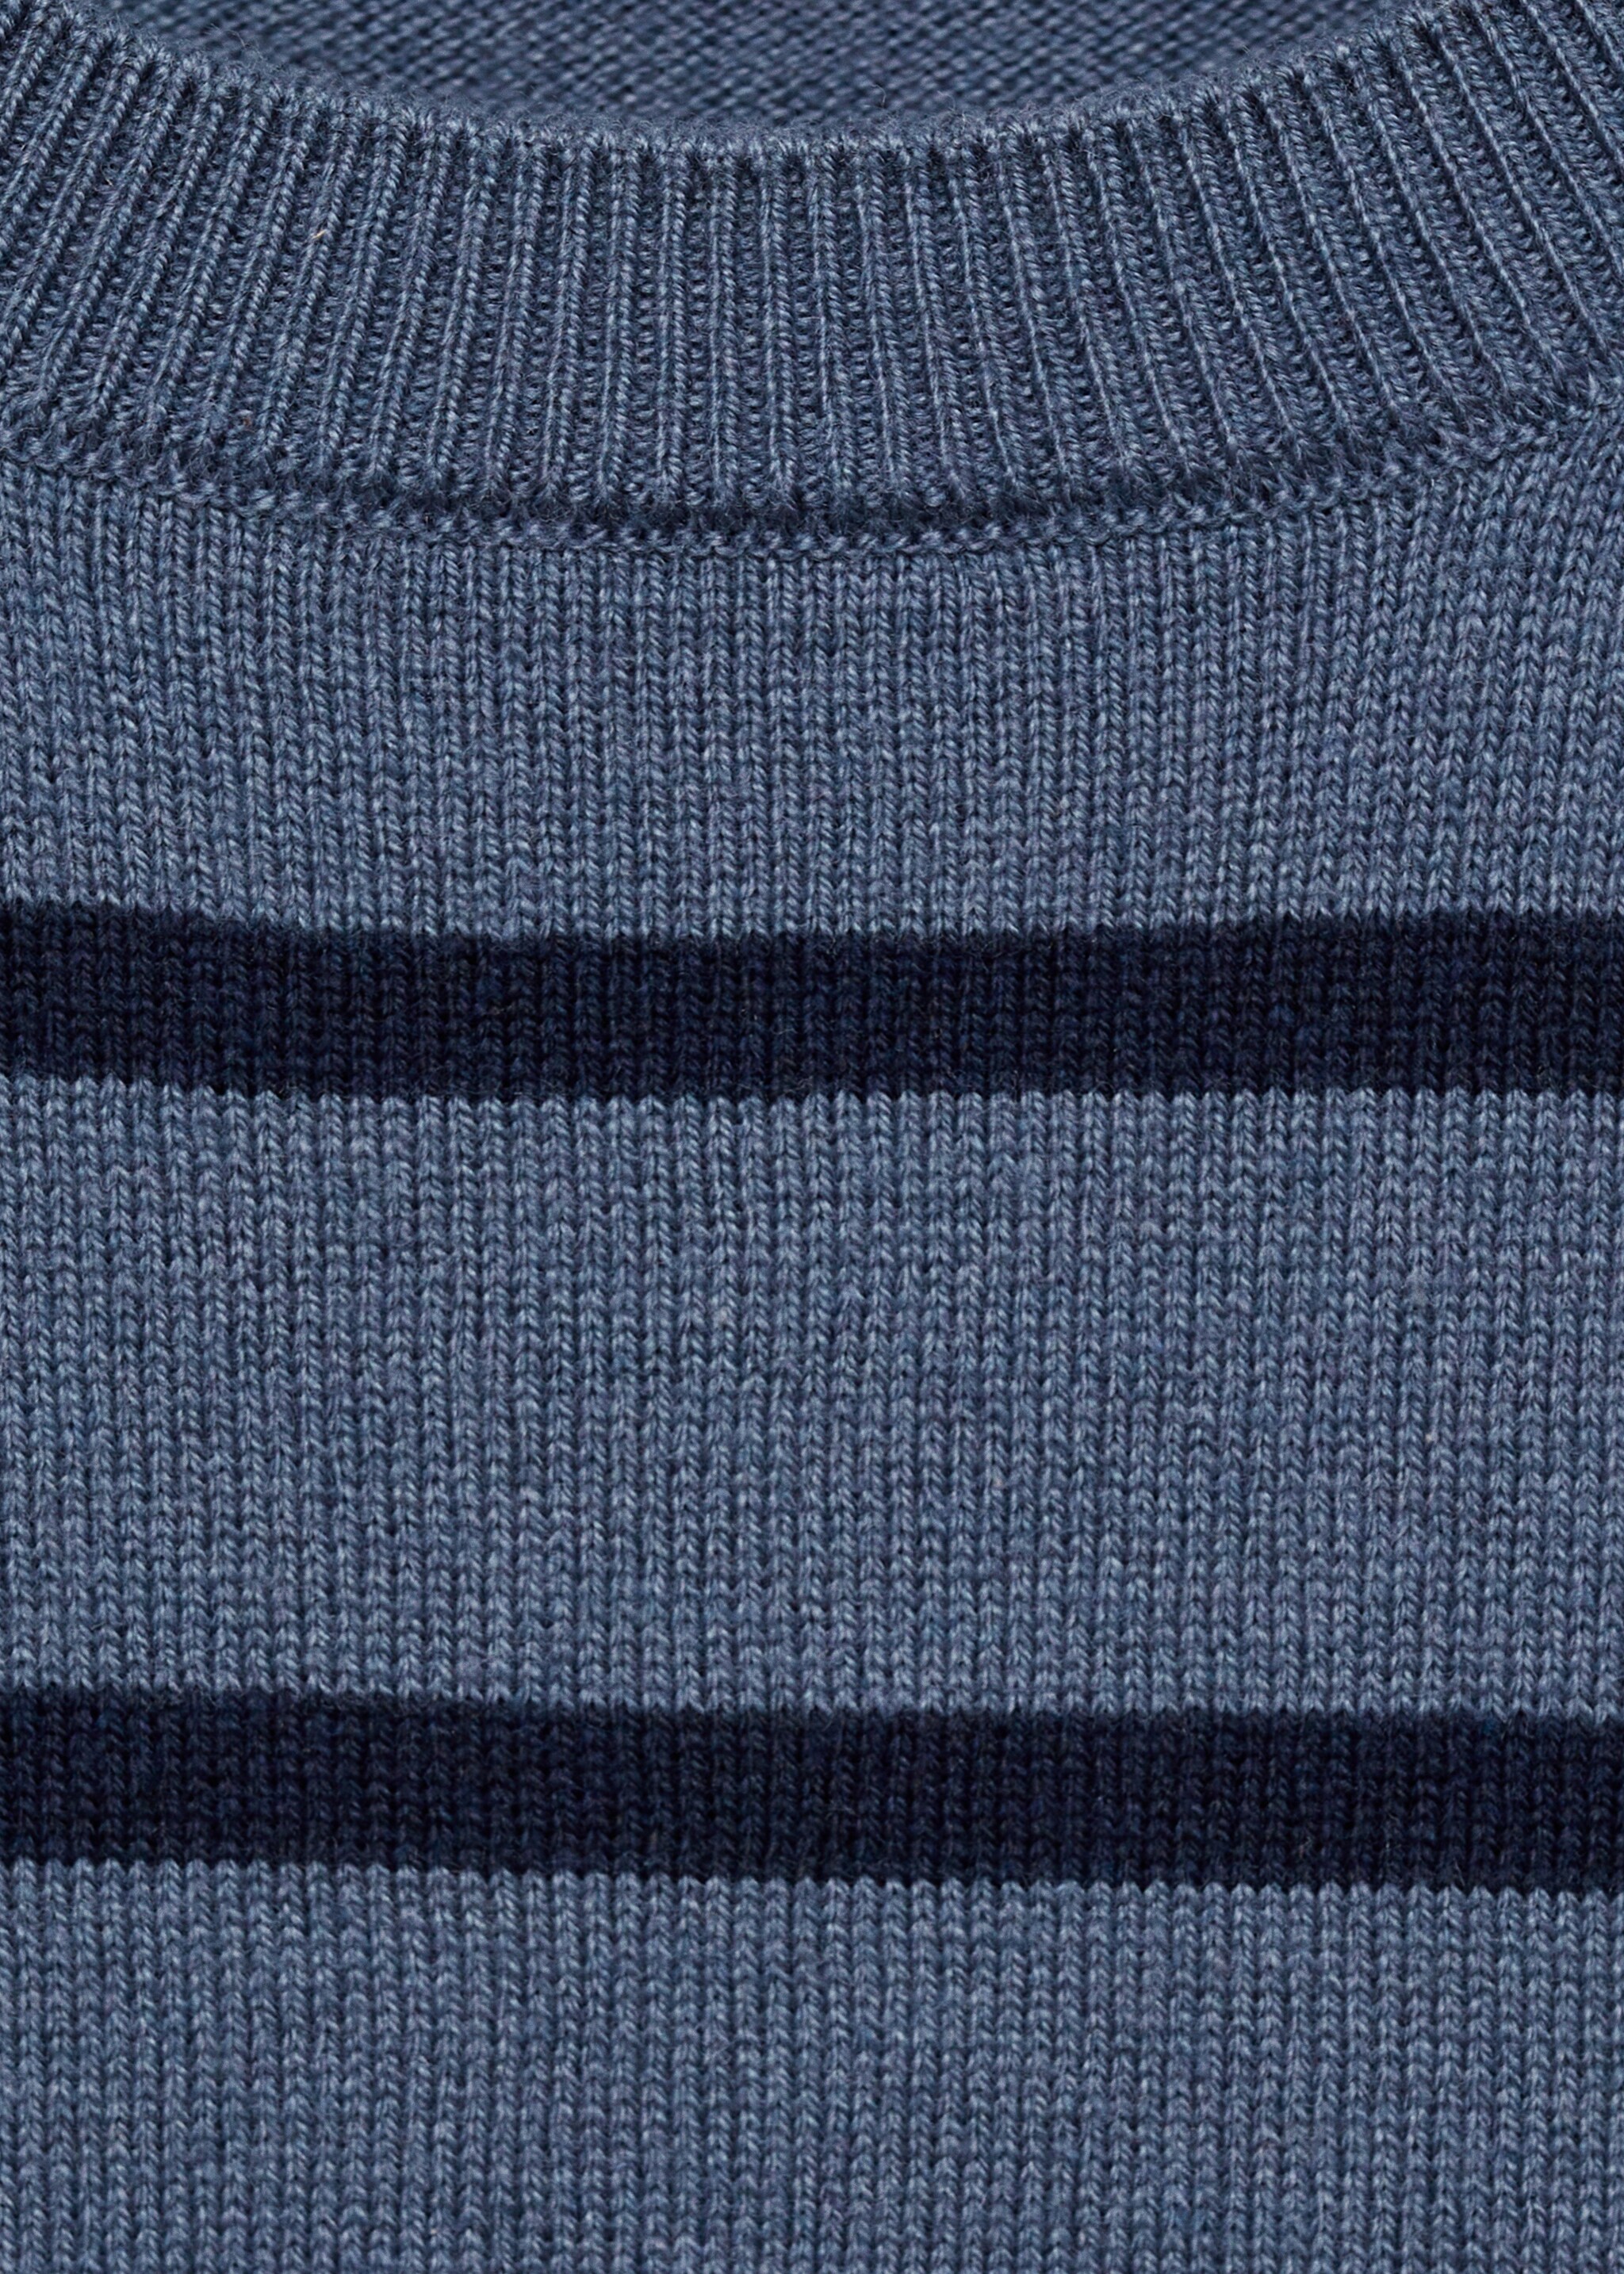 Knit striped sweater - تفاصيل المنتج 8